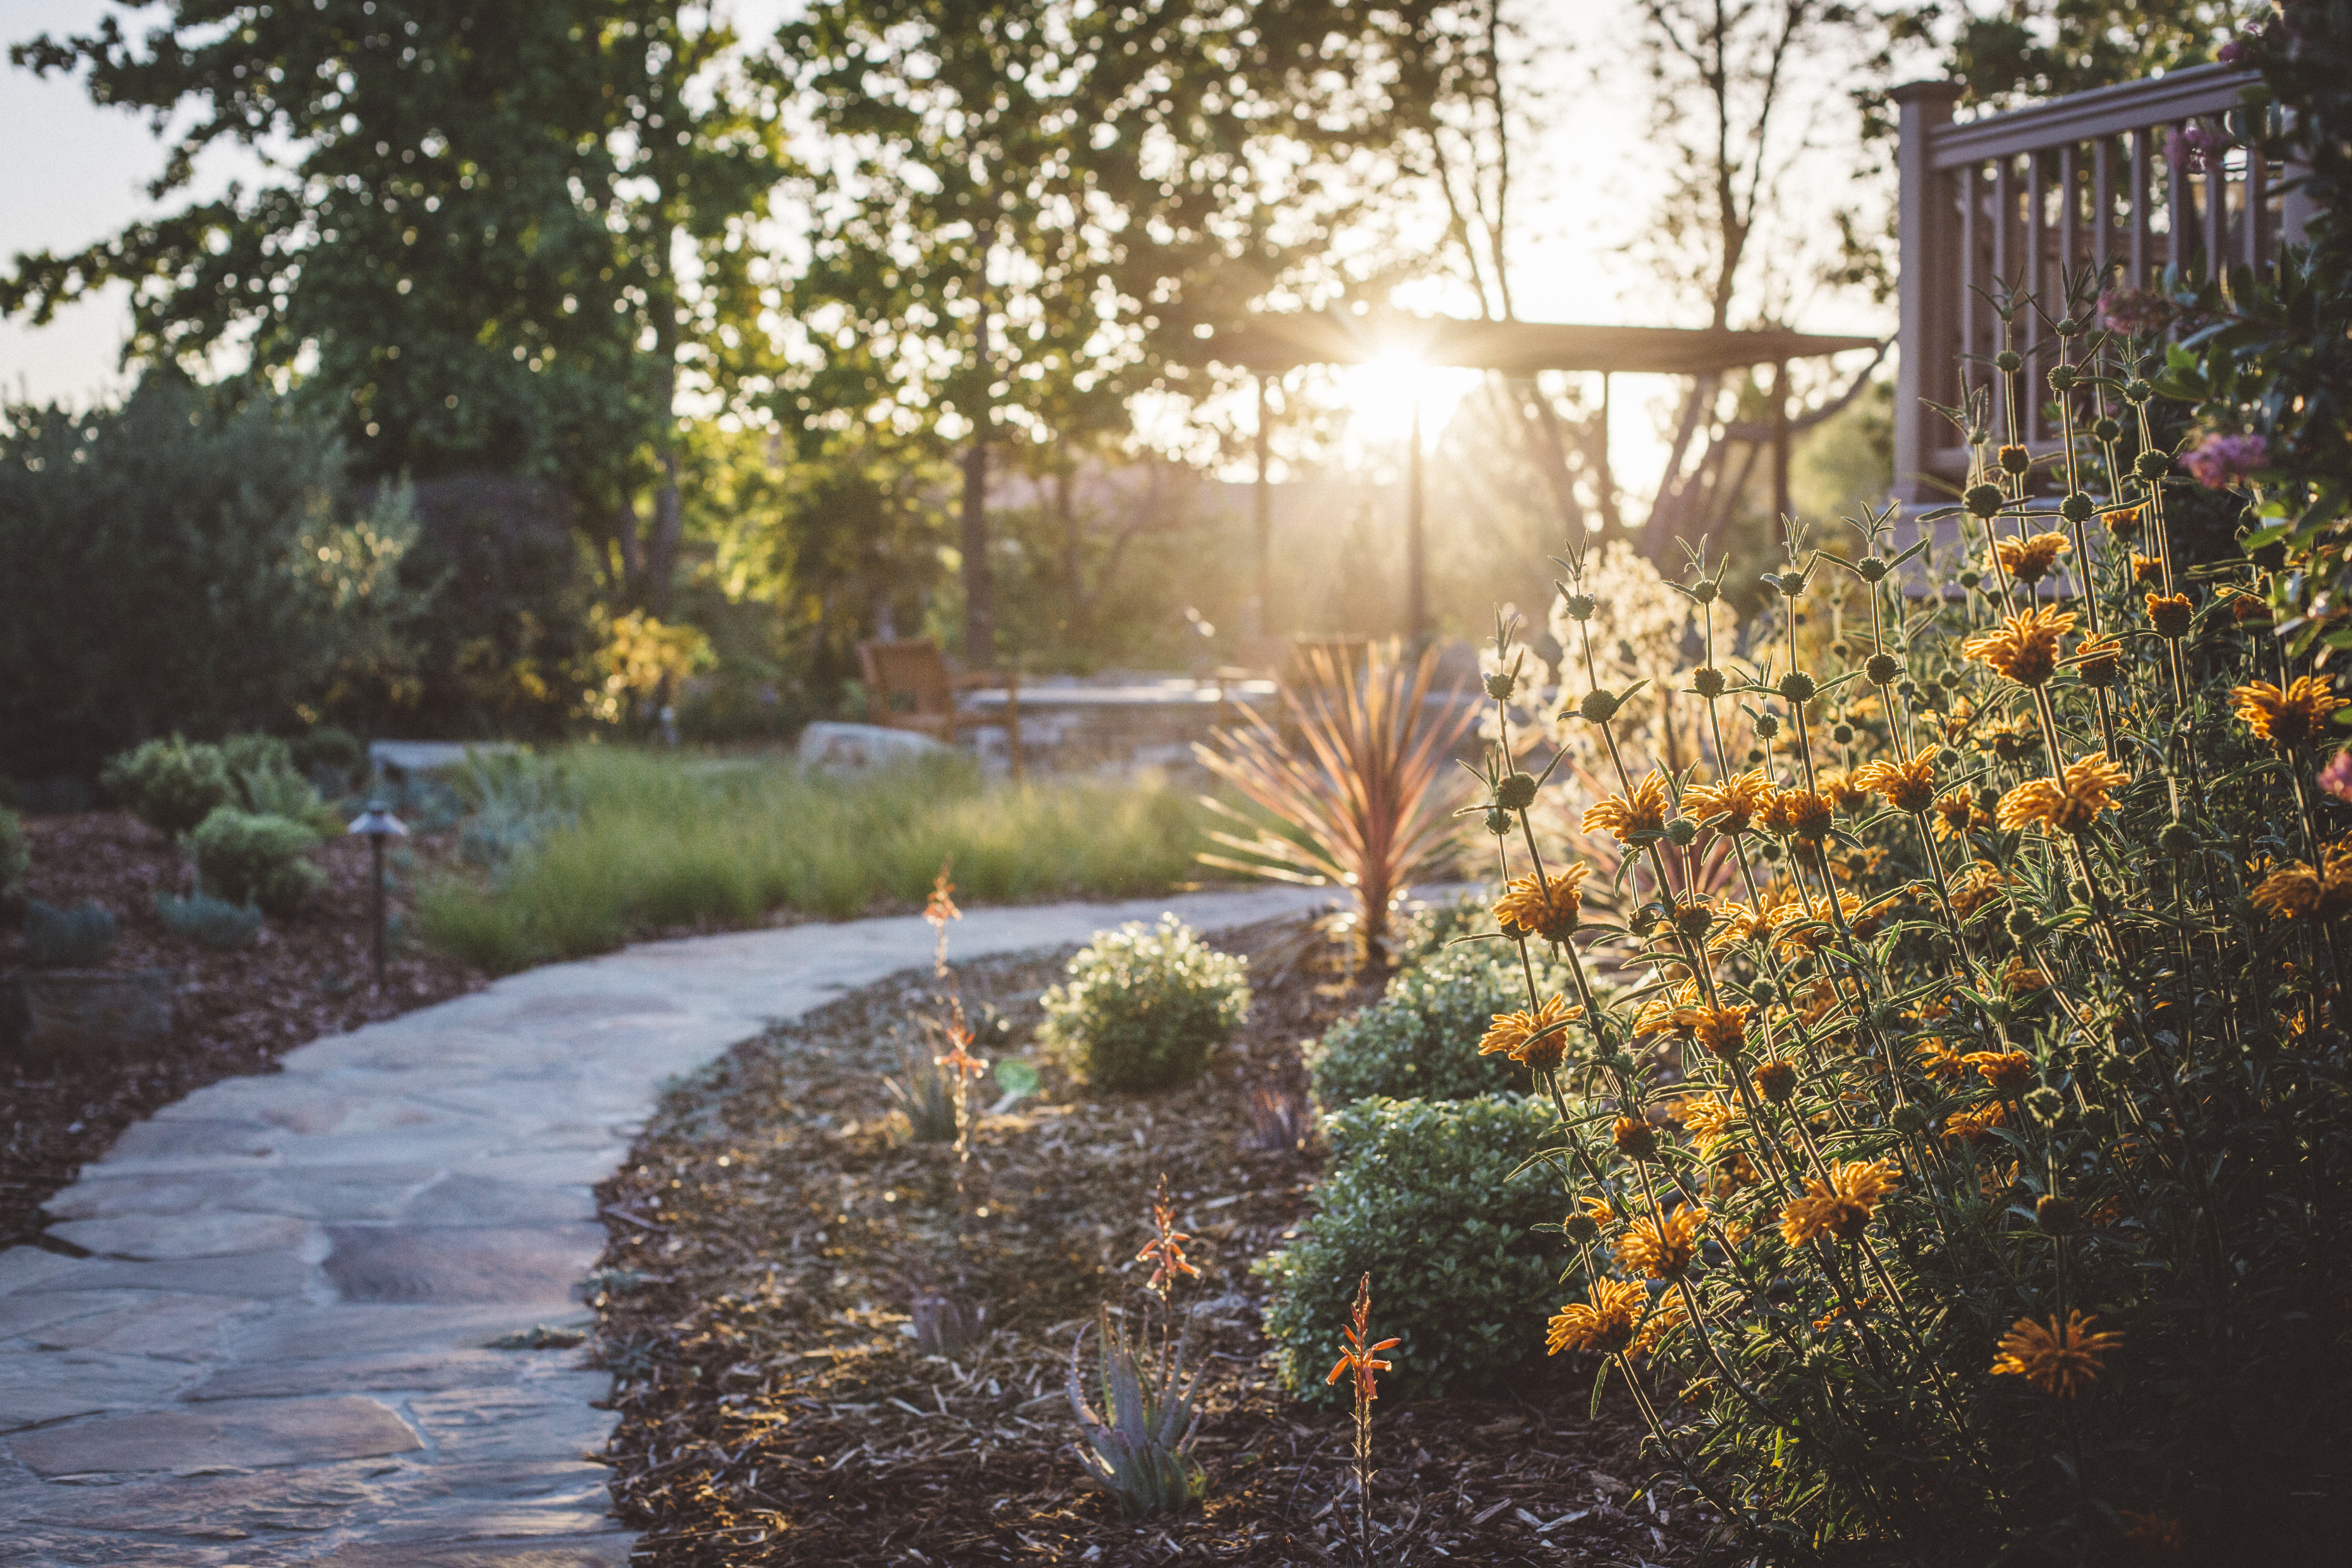 The Garden on Sunset by Martin Turnbull